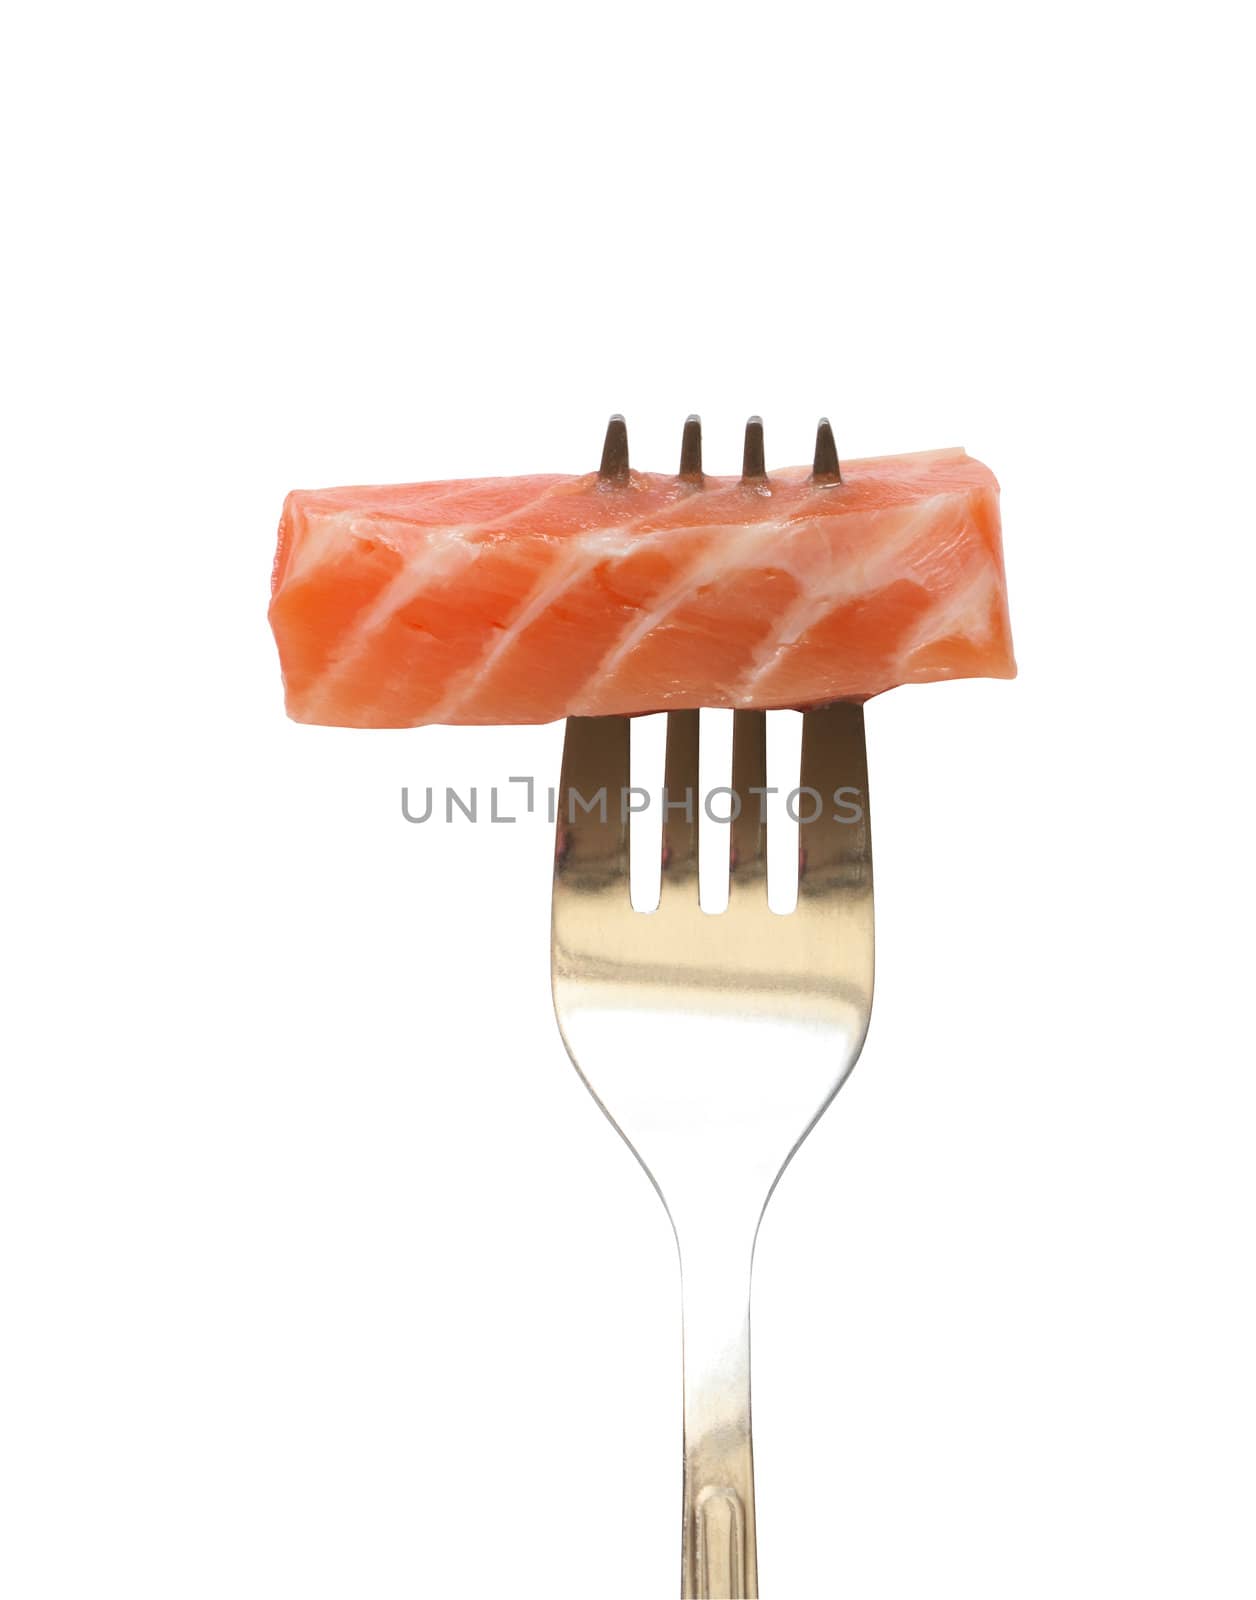 Salmon On The Fork by kvkirillov